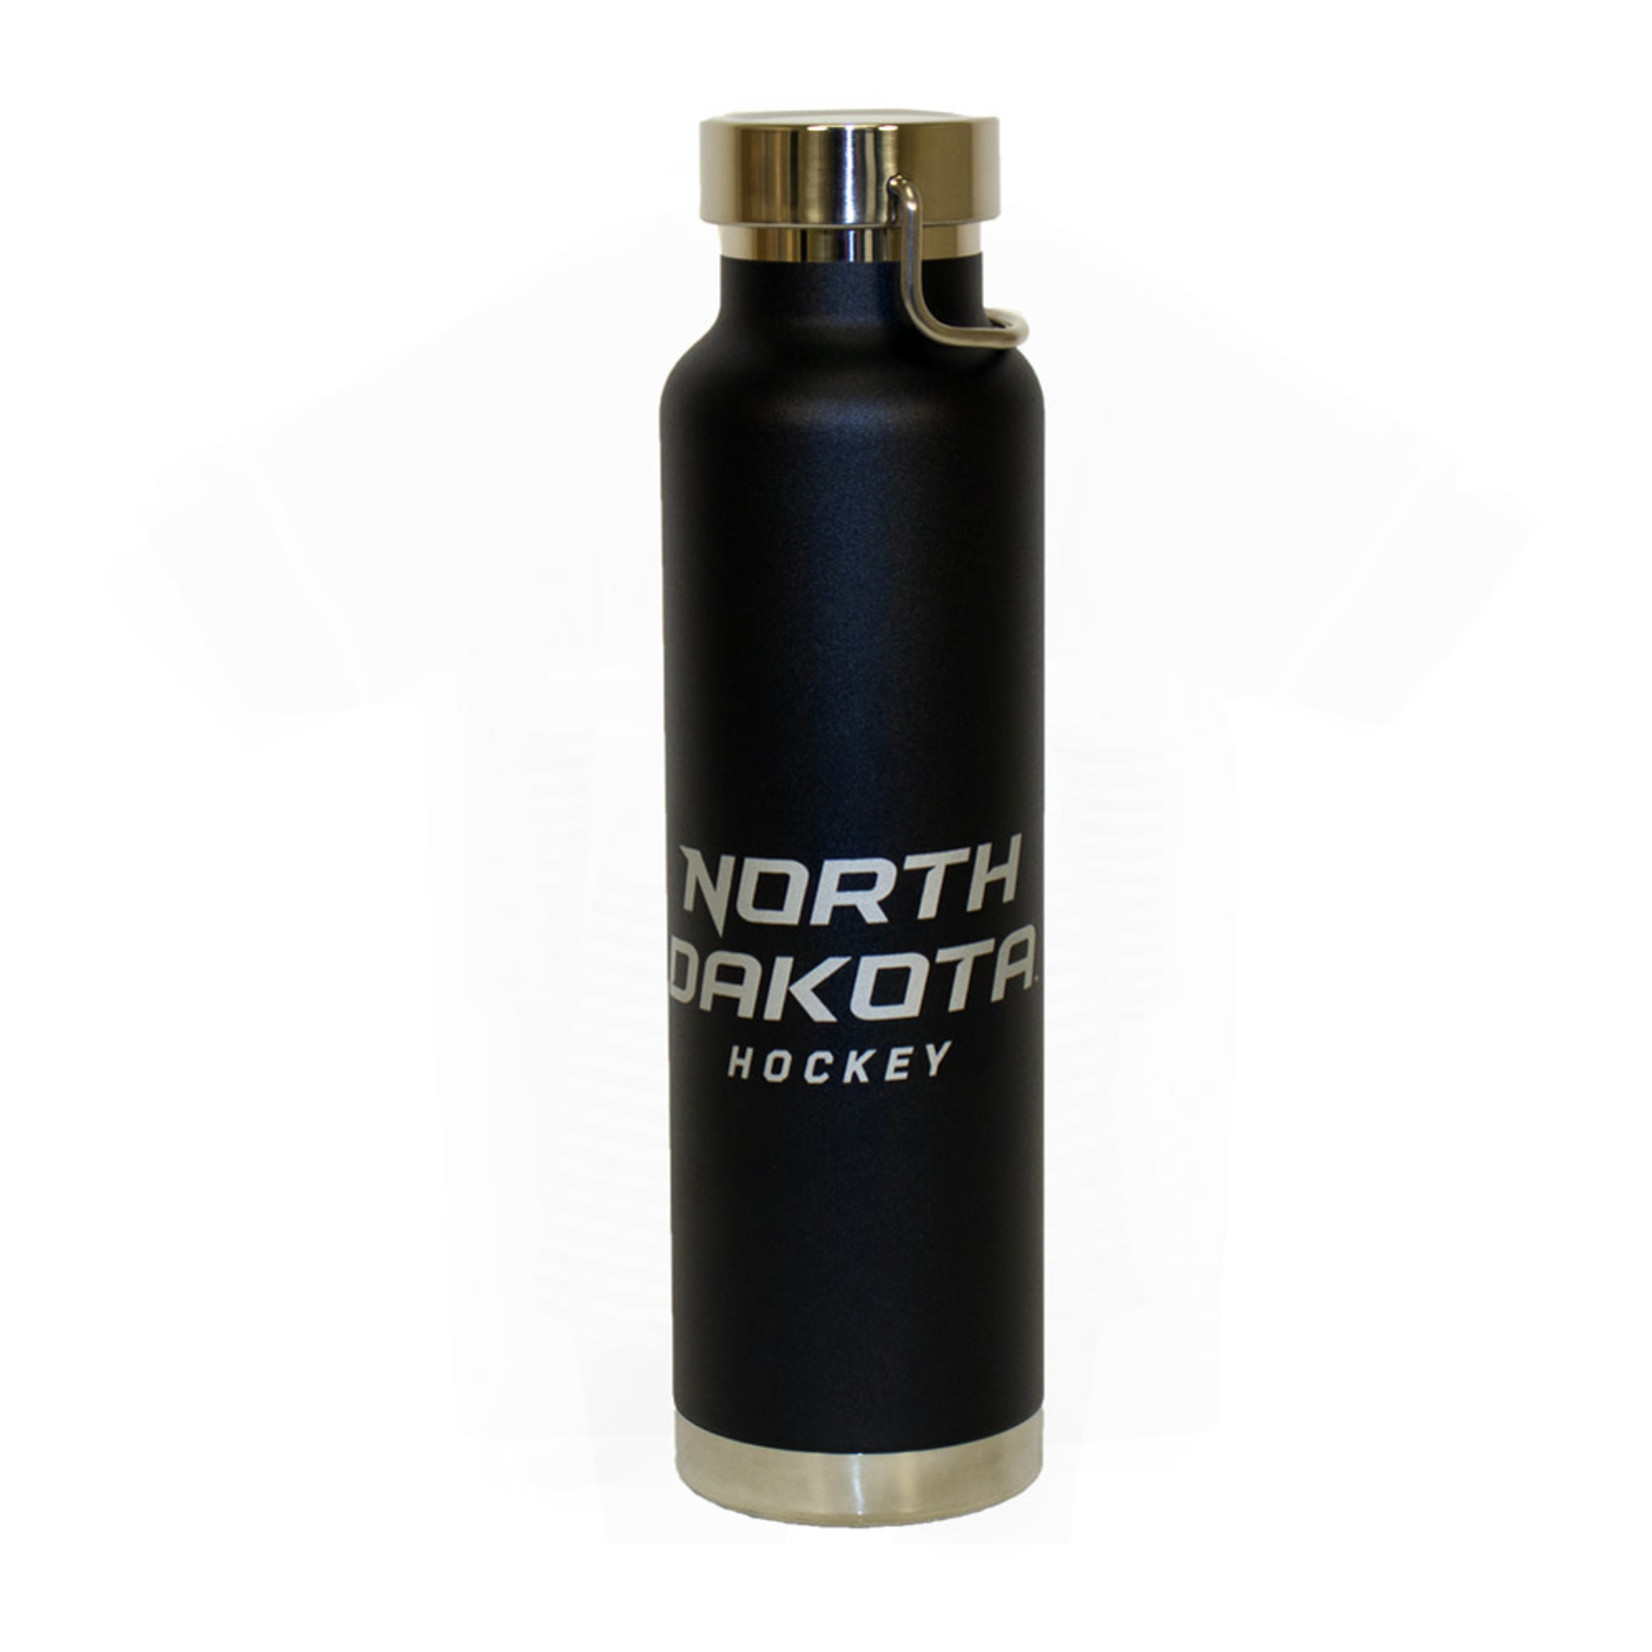 RFSJ Inc. 22 oz North Dakota Hockey Copper Lined Bottle